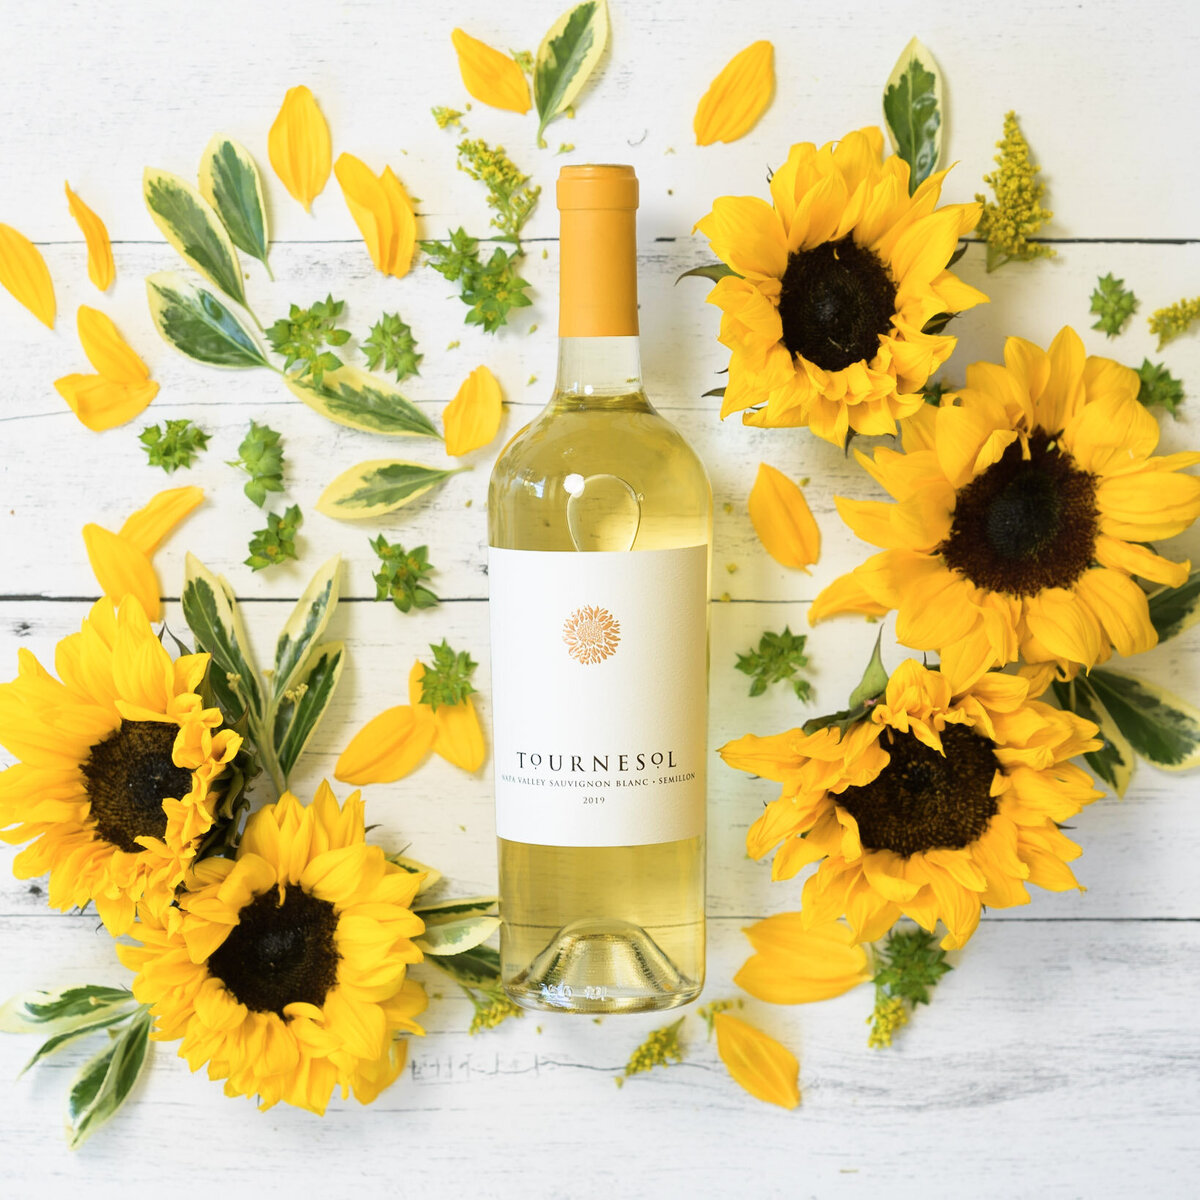 Tournesol-wine-flatlay-sunflowers